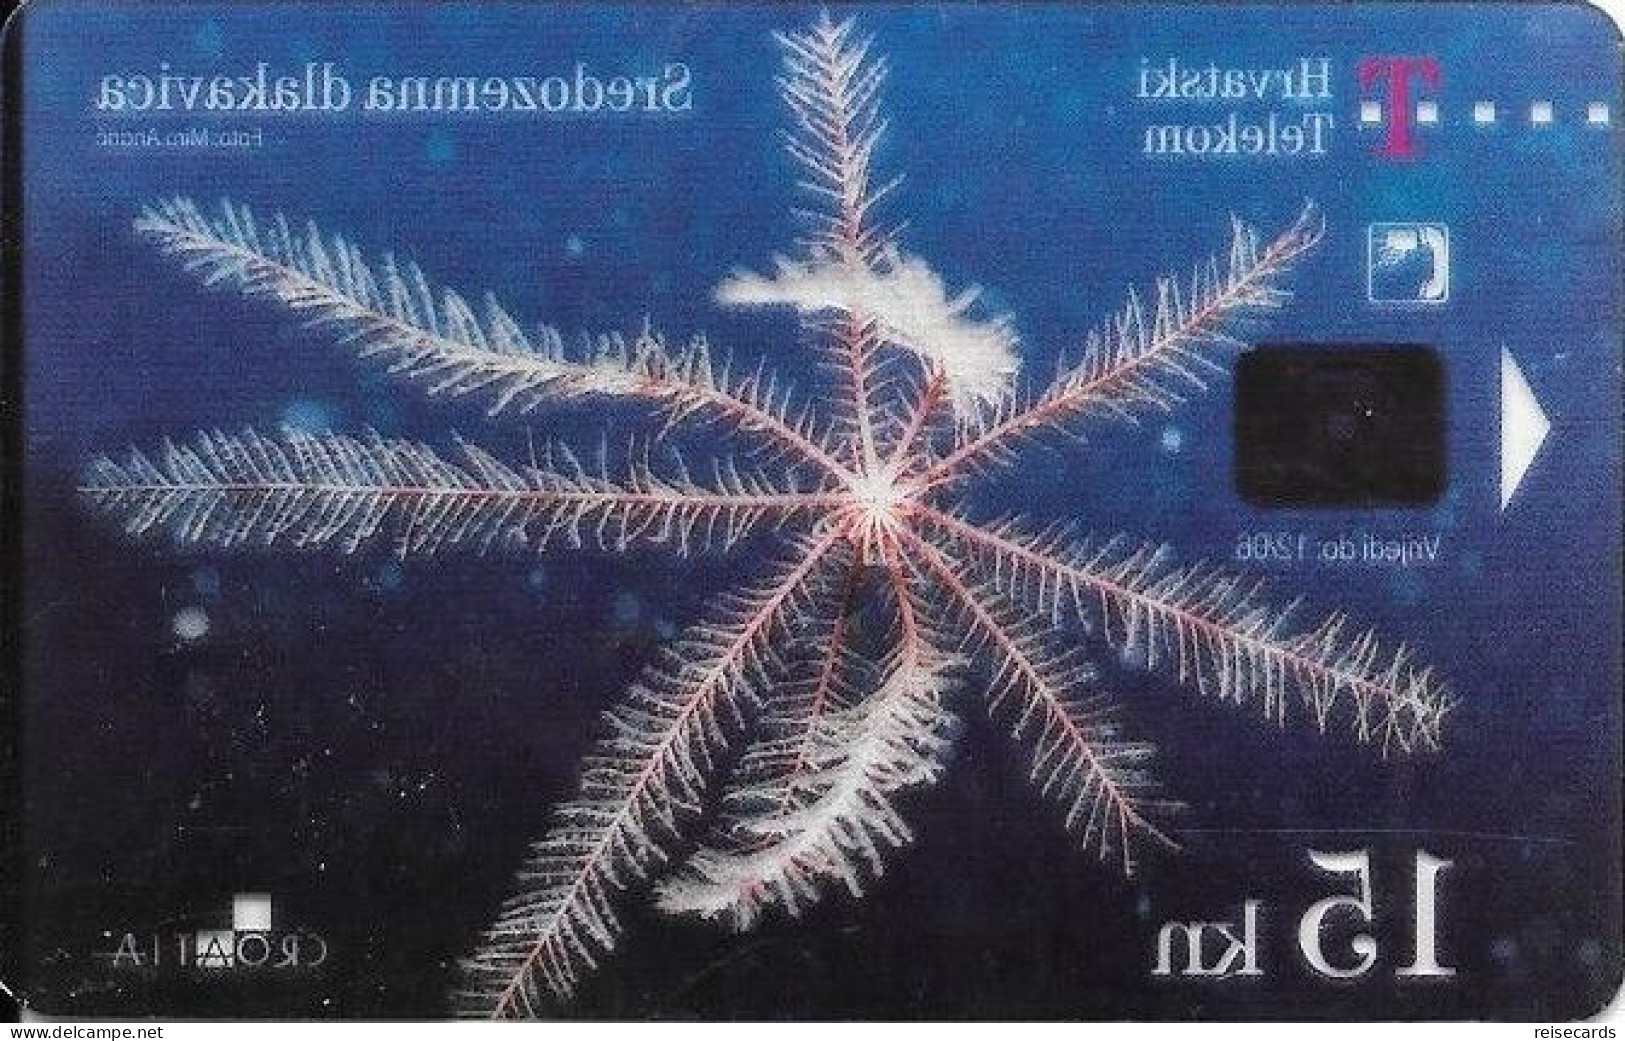 Croatia: Hrvatski Telekom - Underwater World, Sredozemna Dlakavica . Transparent - Croatia